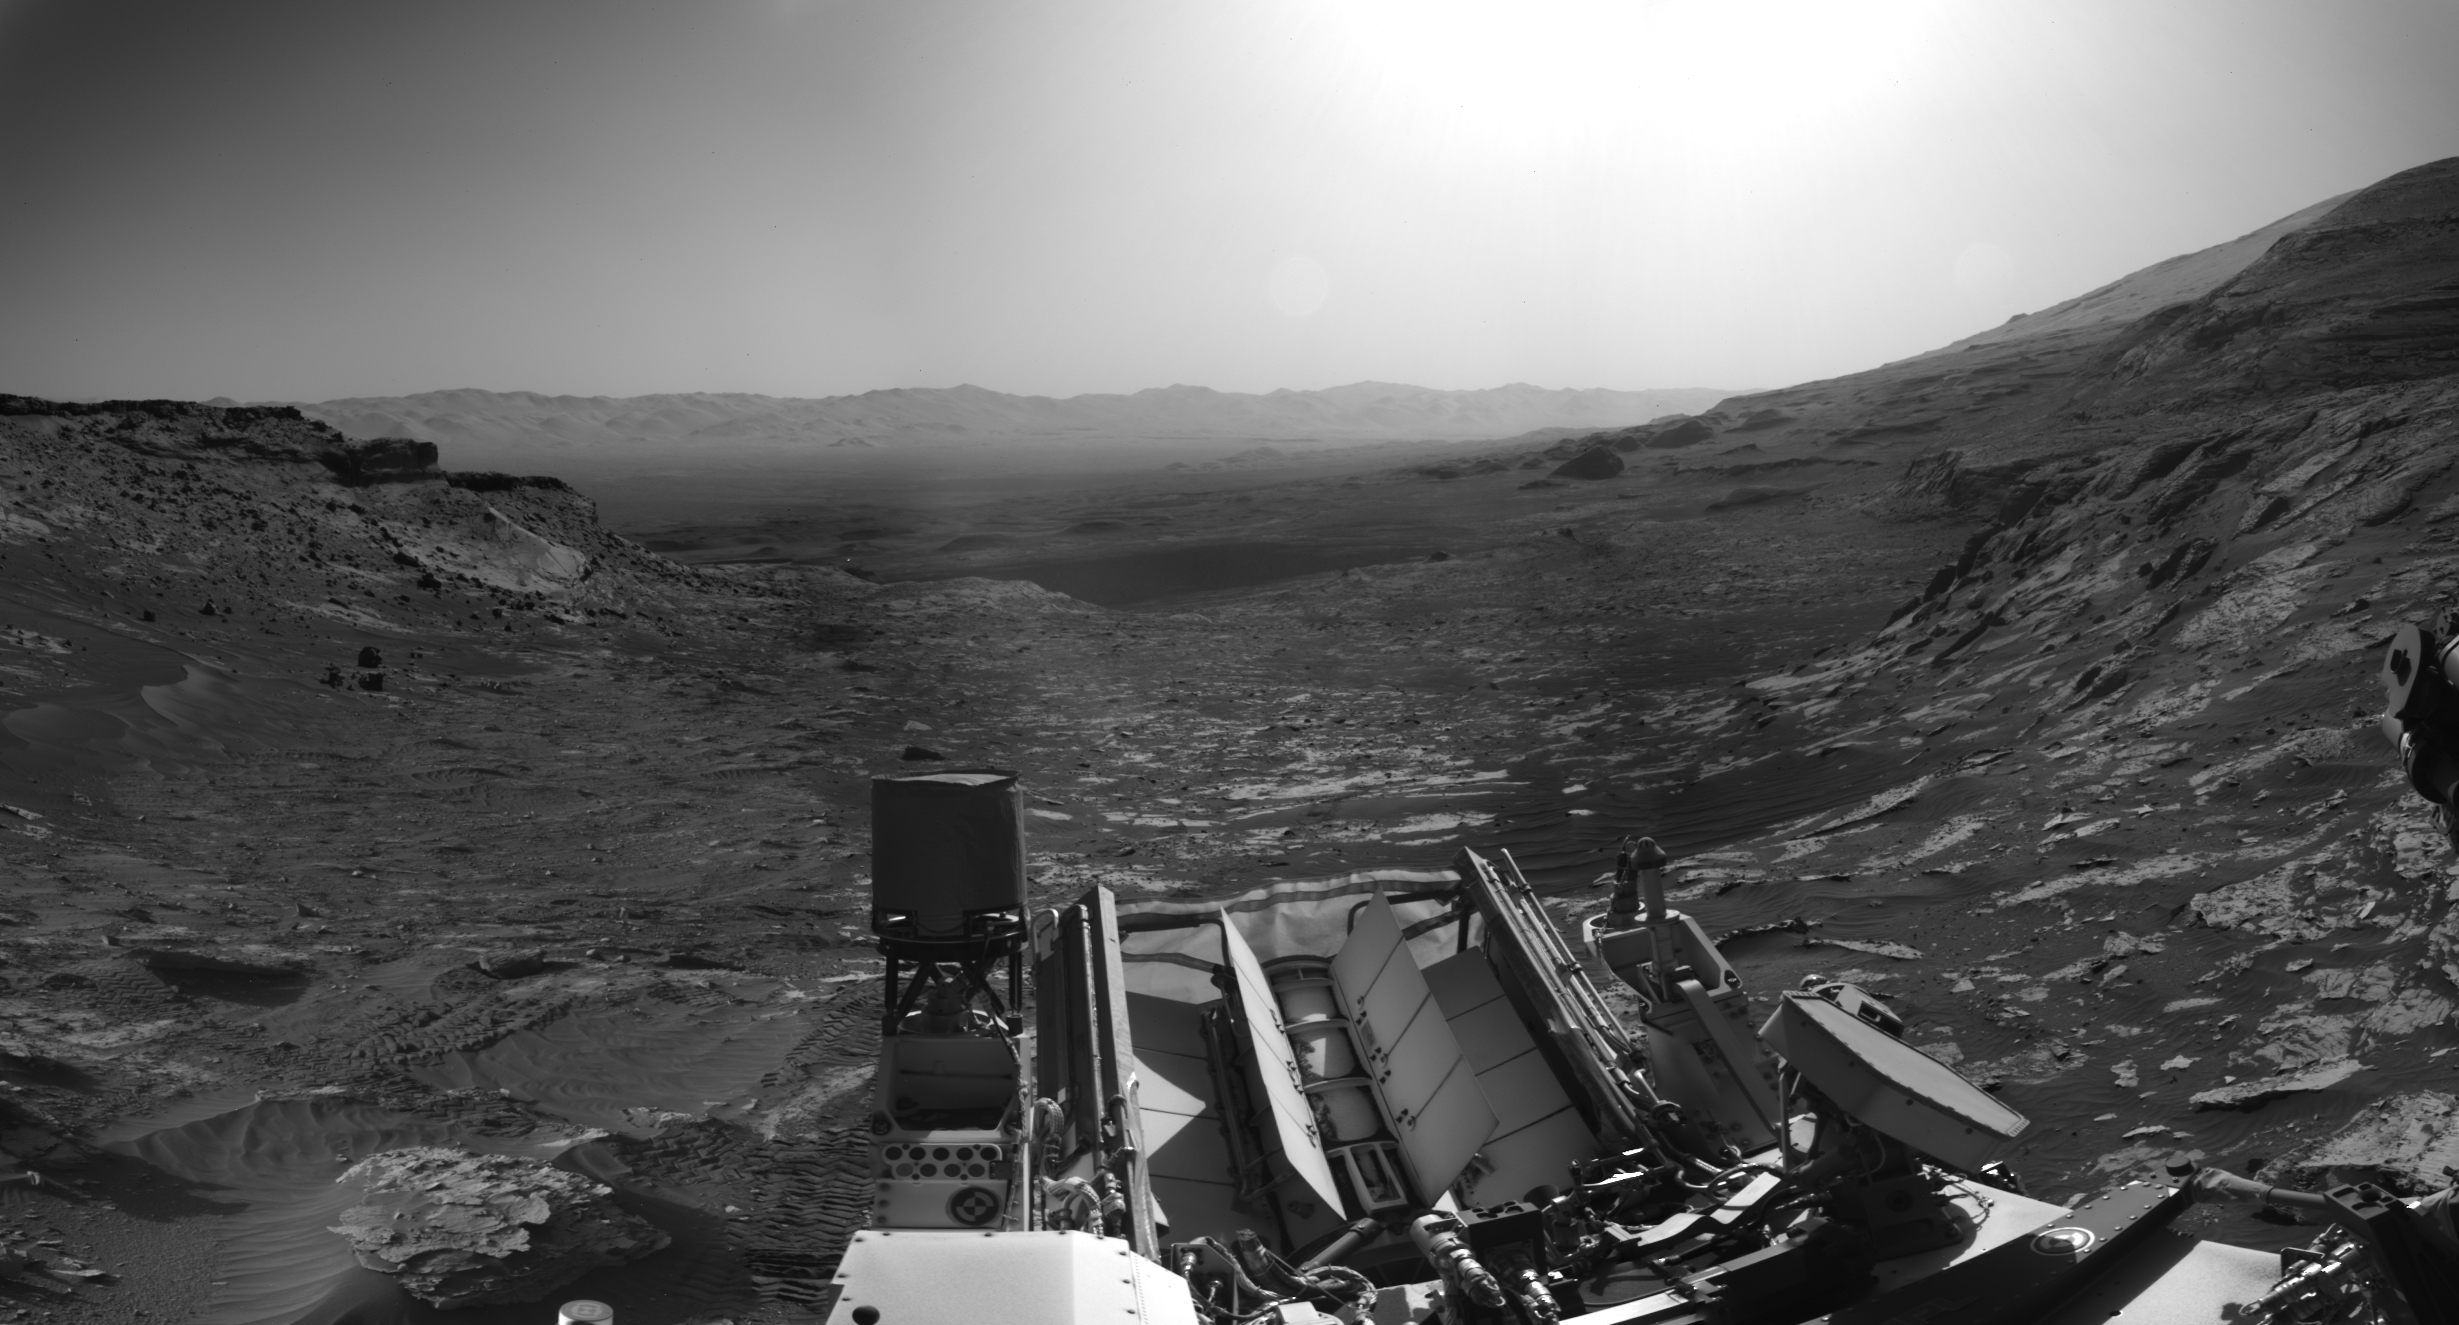 NASA's Curiosity rover photographed Mars using its navigation cameras.